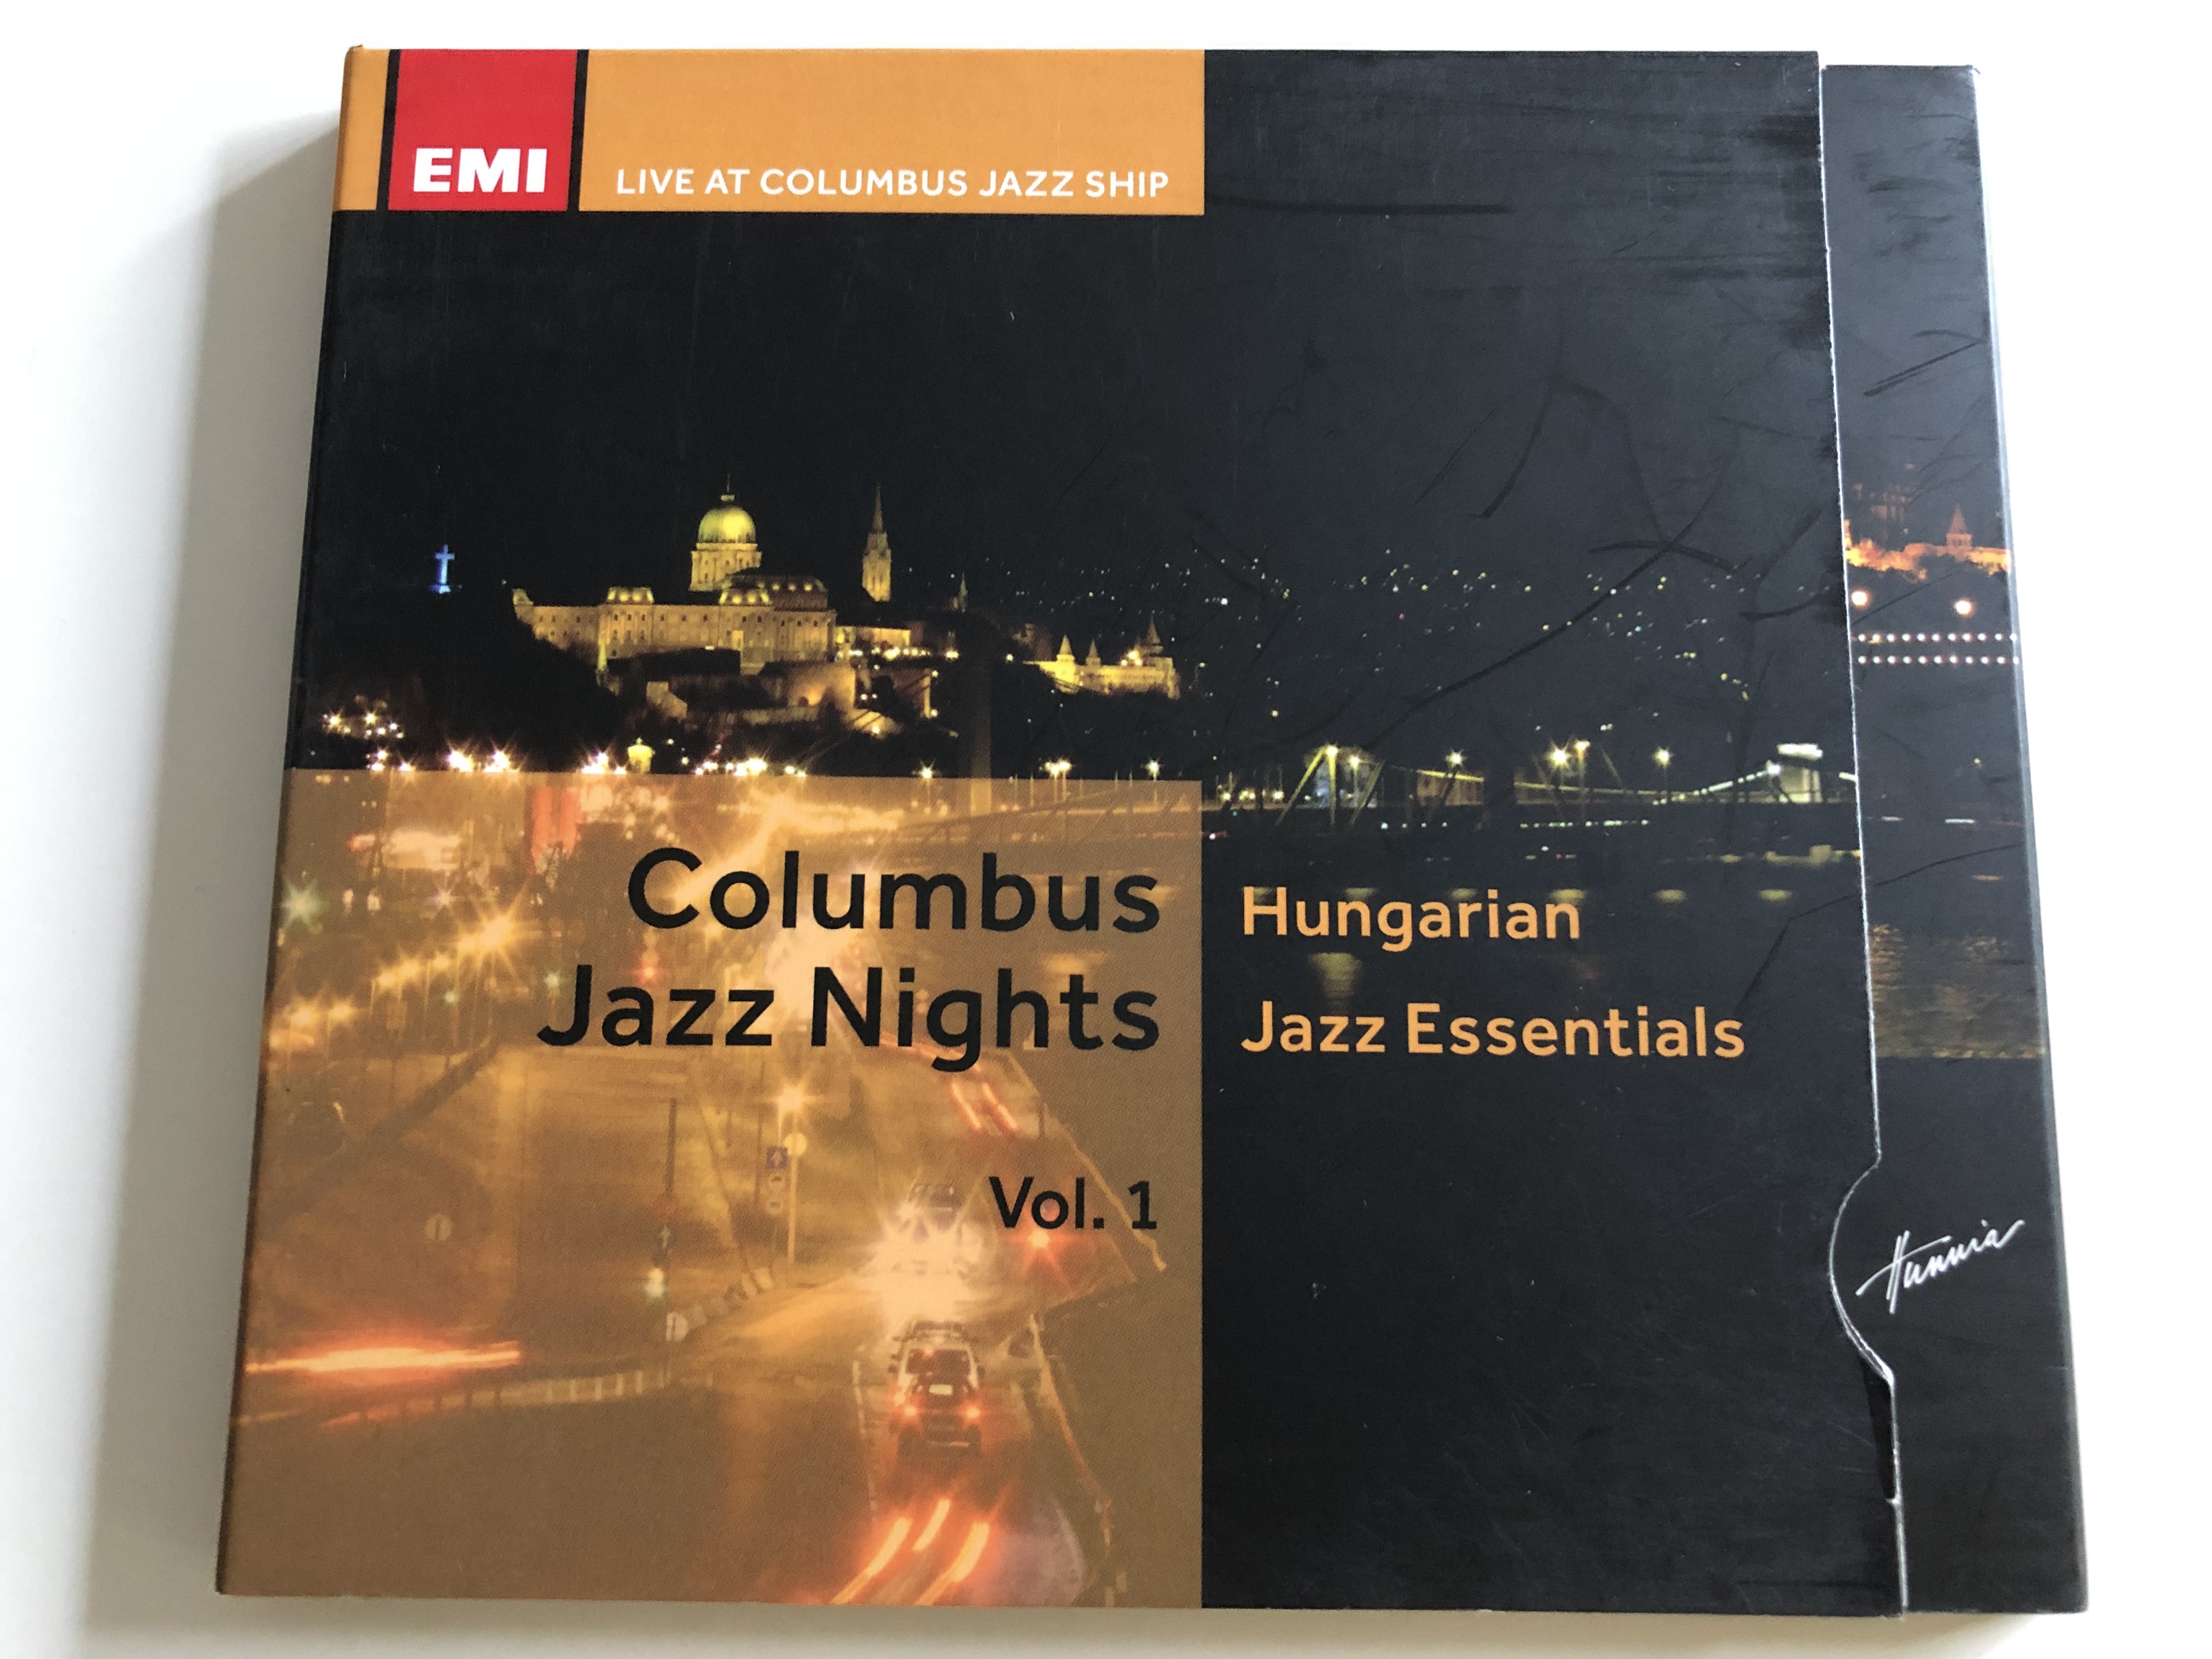 columbus-jazz-nights-vol.-1-hungarian-jazz-essentials-emi-live-at-columbus-jazz-ship-audio-cd-2009-1-.jpg